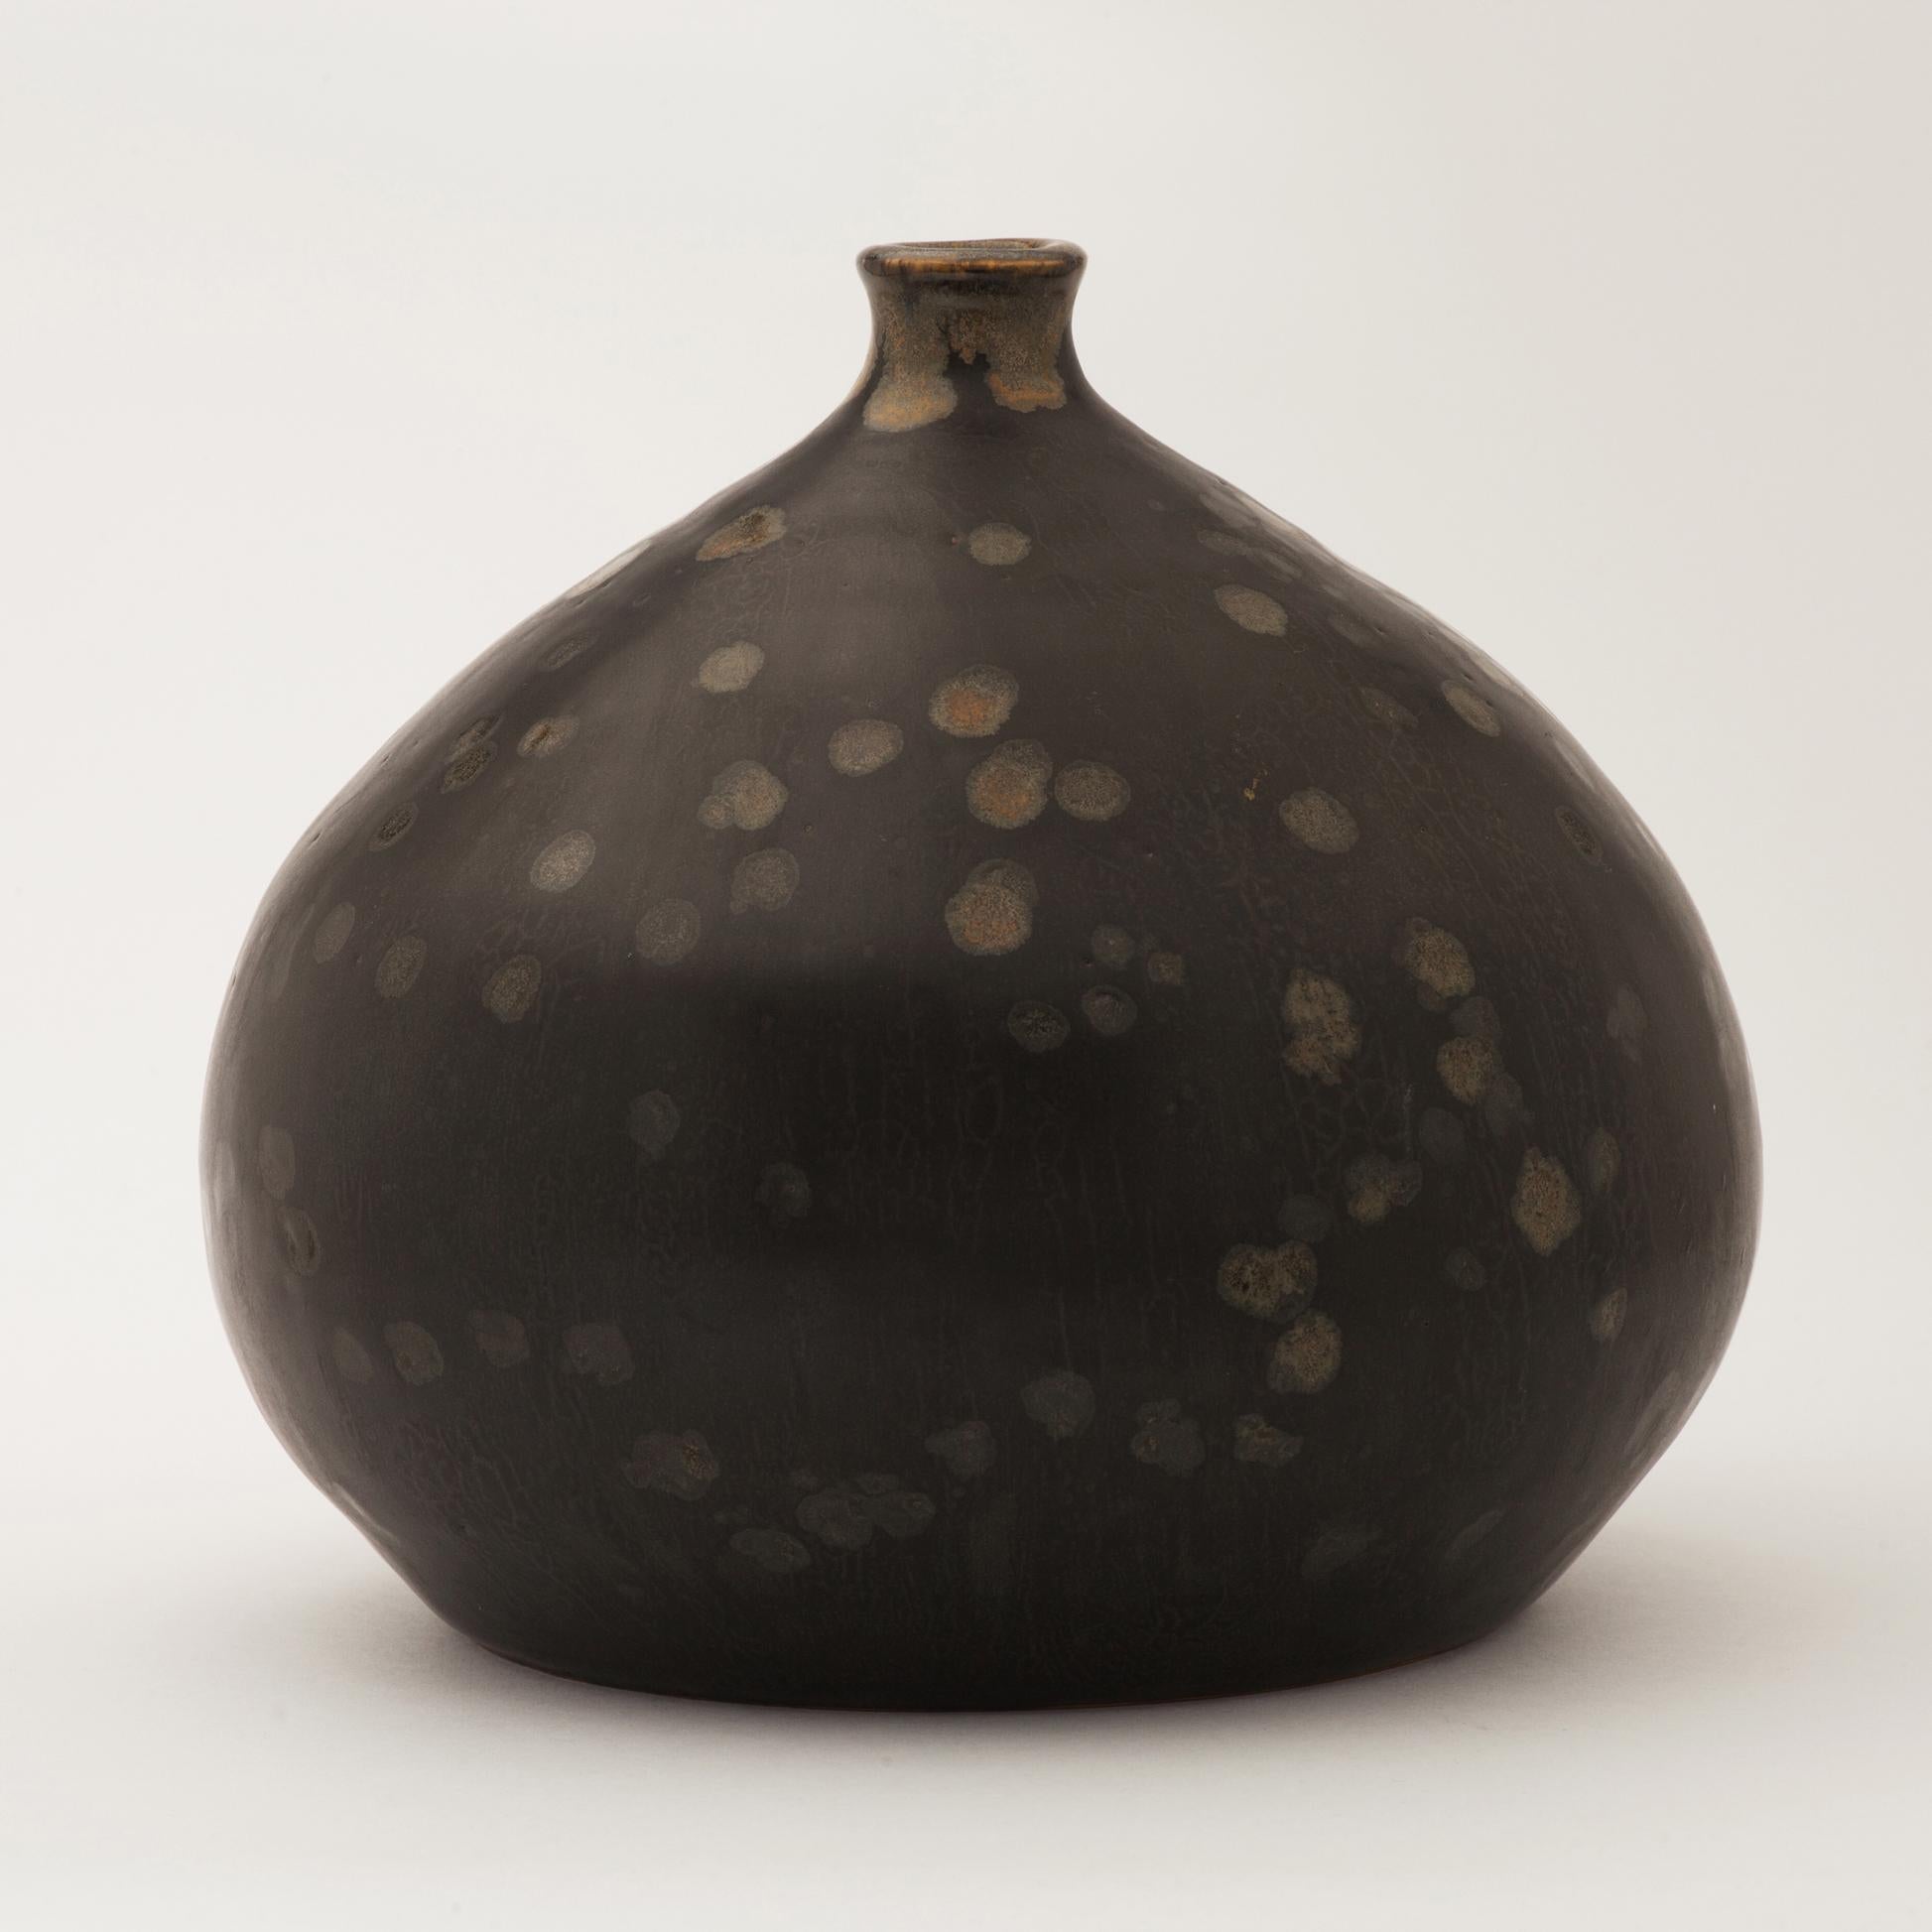 Rare ceramic vase pear shape by Denise Pointud Detraz. Handmade stoneware with beautiful glaze.
Unique piece.